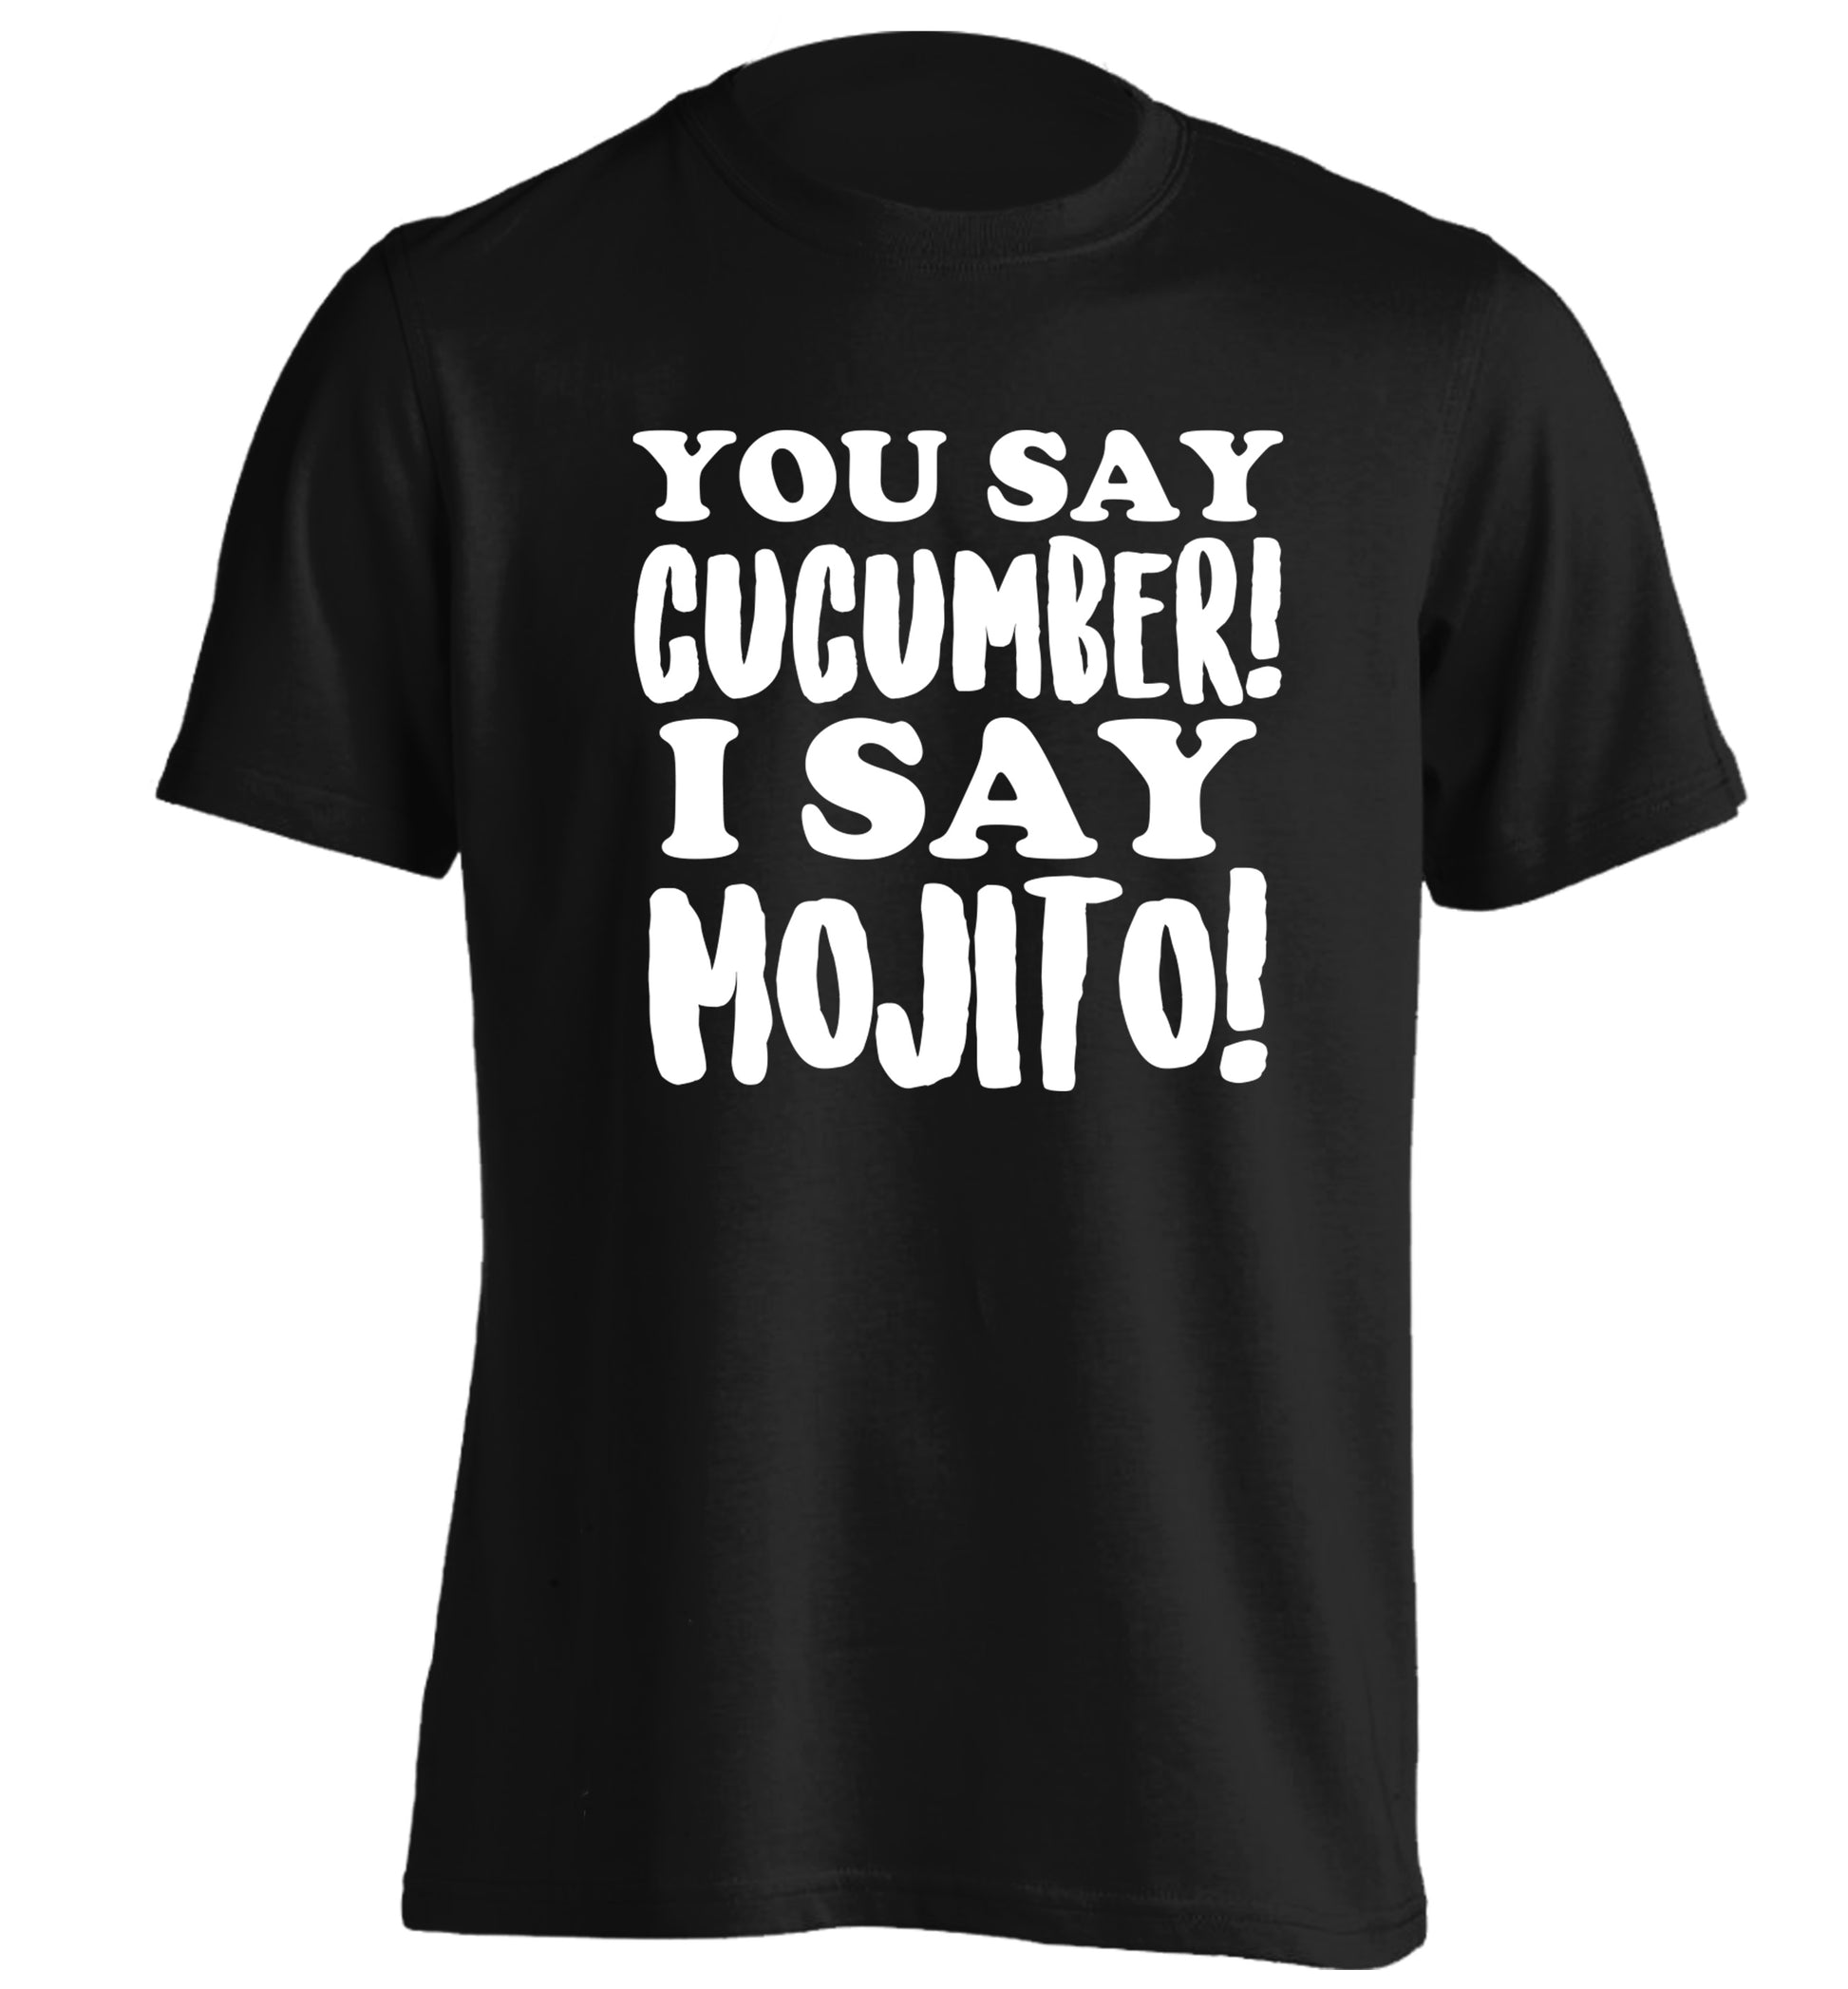 You say cucumber I say mojito! adults unisex black Tshirt 2XL